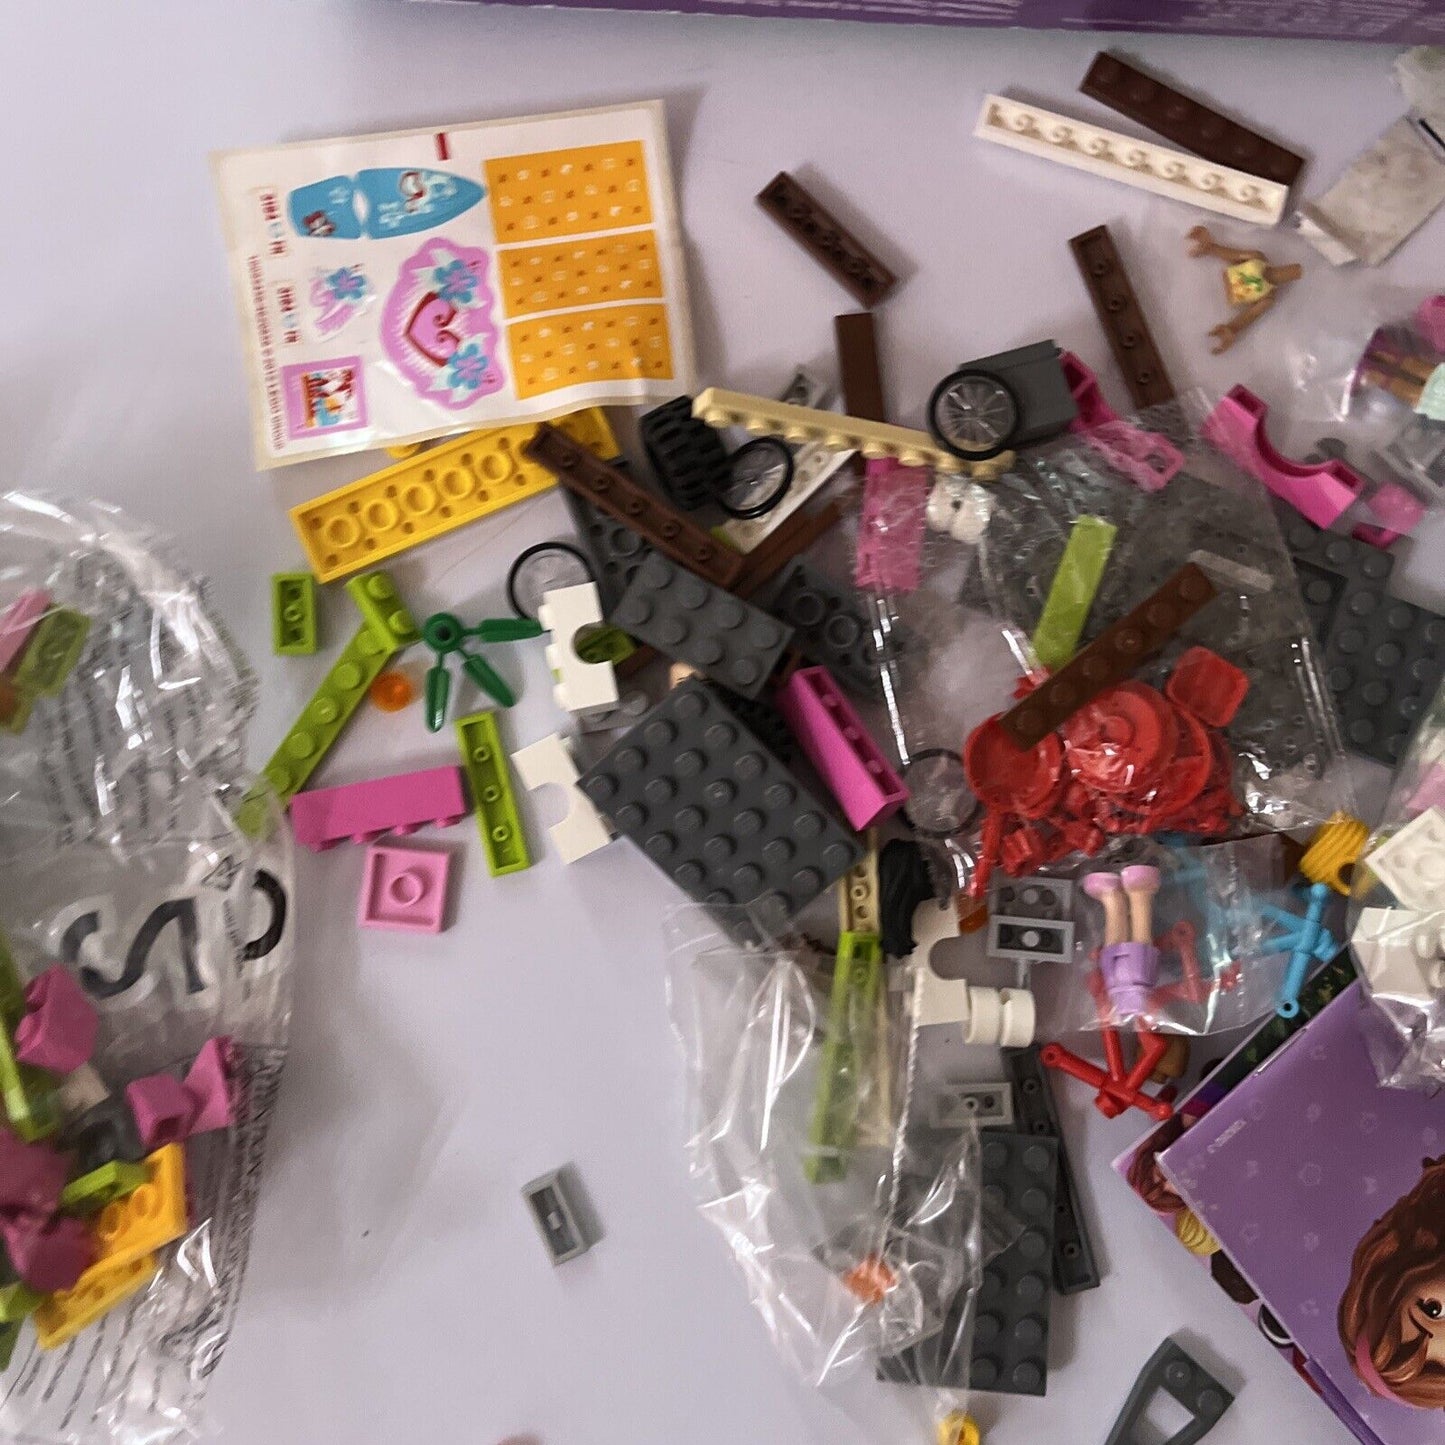 Lego Friends Adventure Camper Set 3184 *Uncounted Incomplete Set*